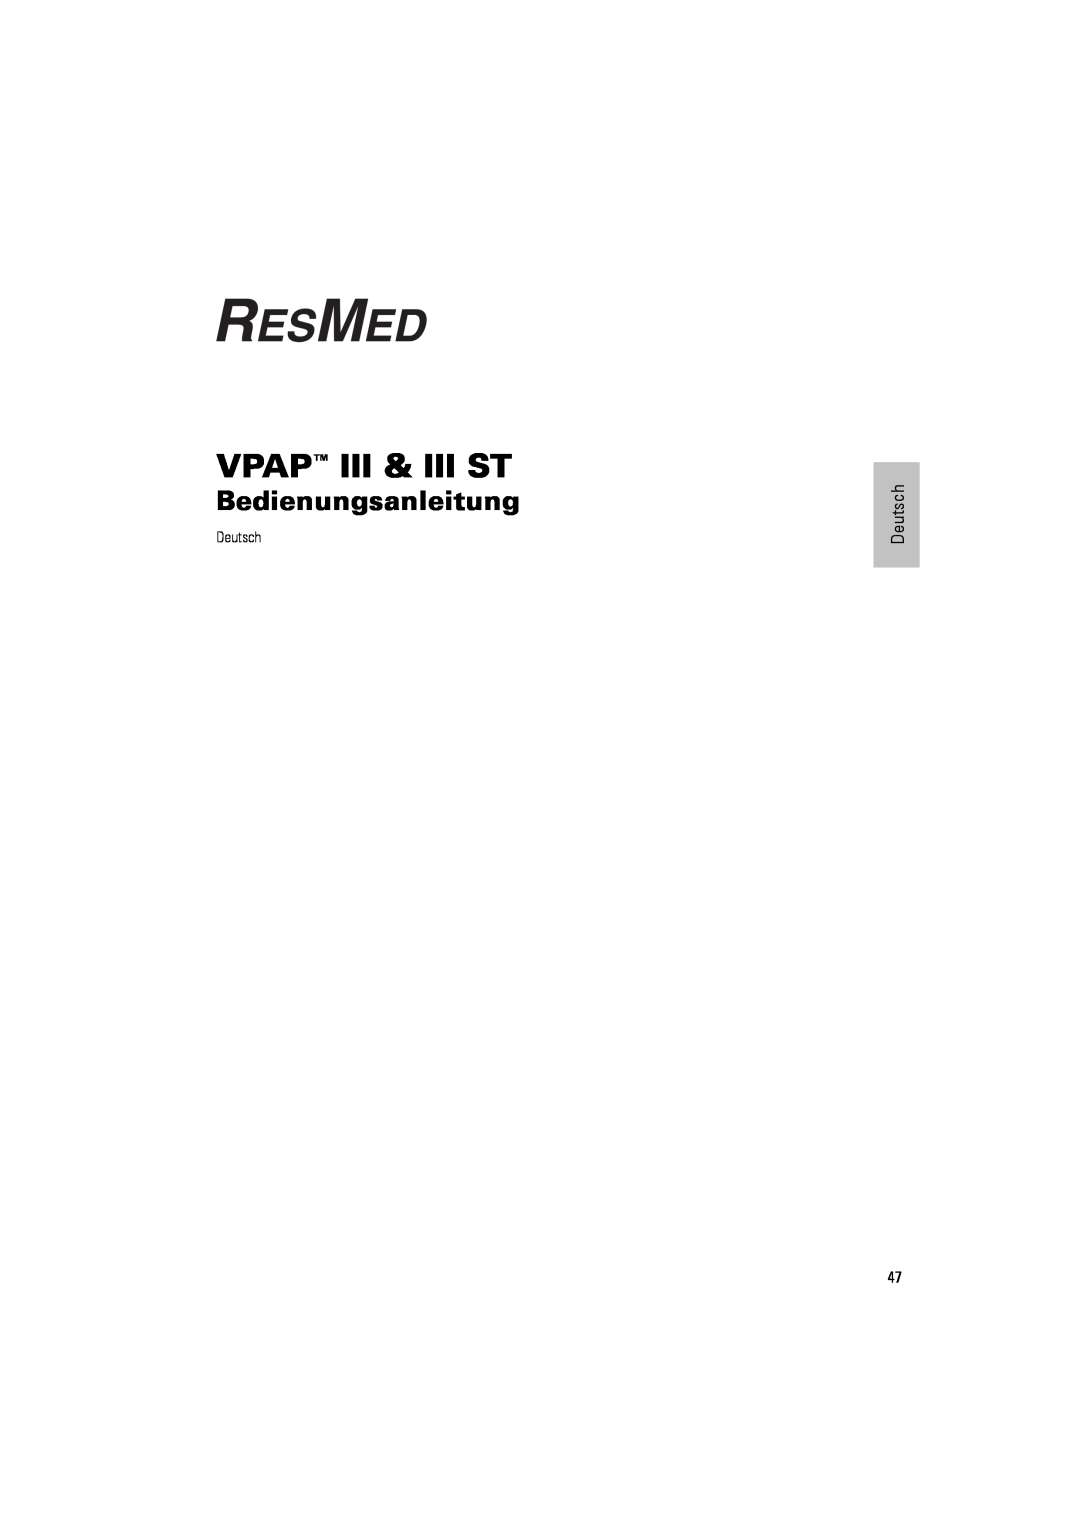 ResMed III & III ST user manual Bedienungsanleitung, Vpap Iii & Iii St, Deutsch 